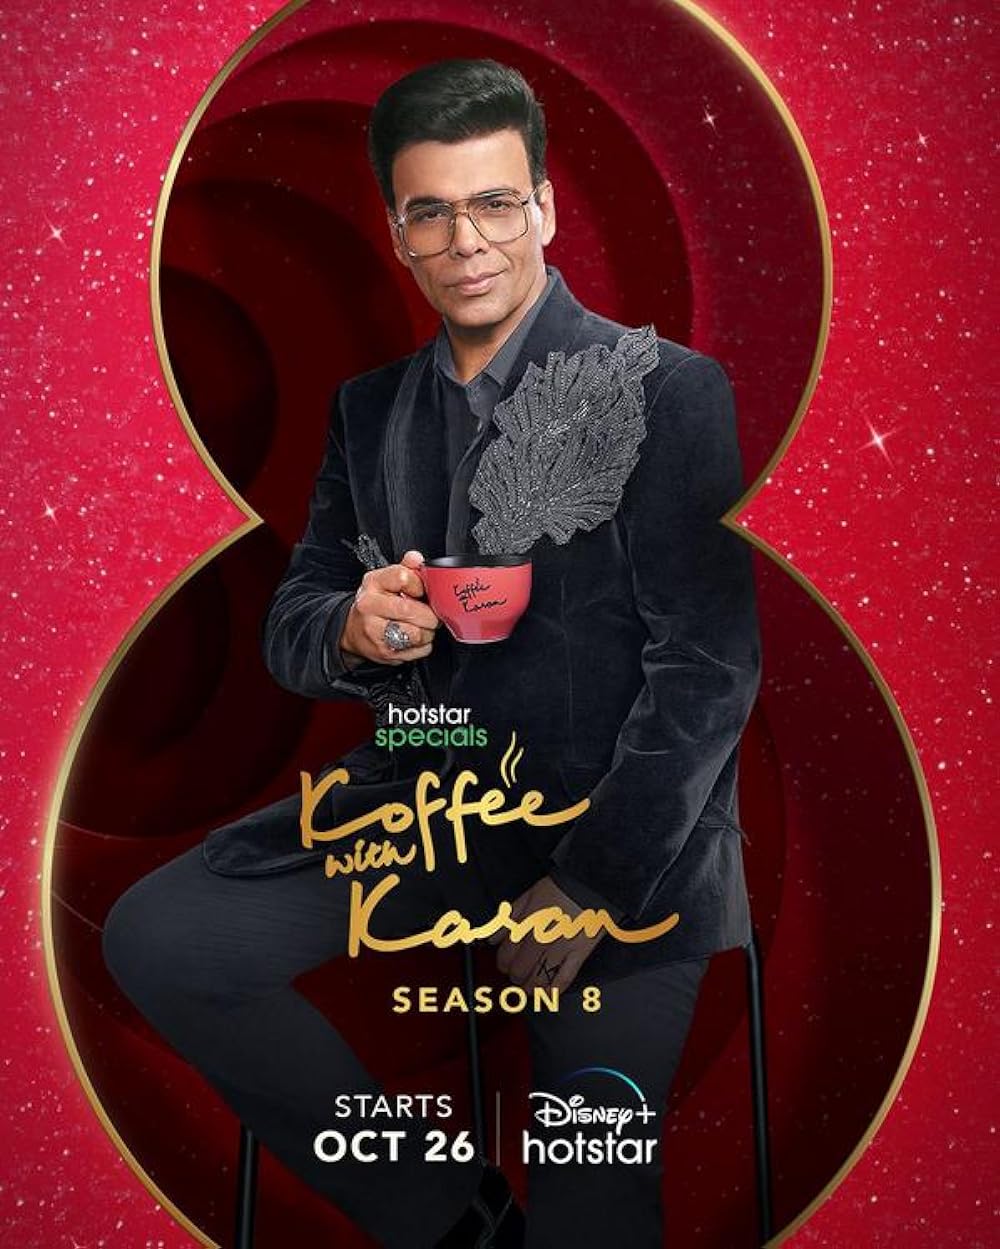 Koffee With Karan Season 8 (October 26) - Disney+ Hotstar
Karan Johar's celebrated talk show, 